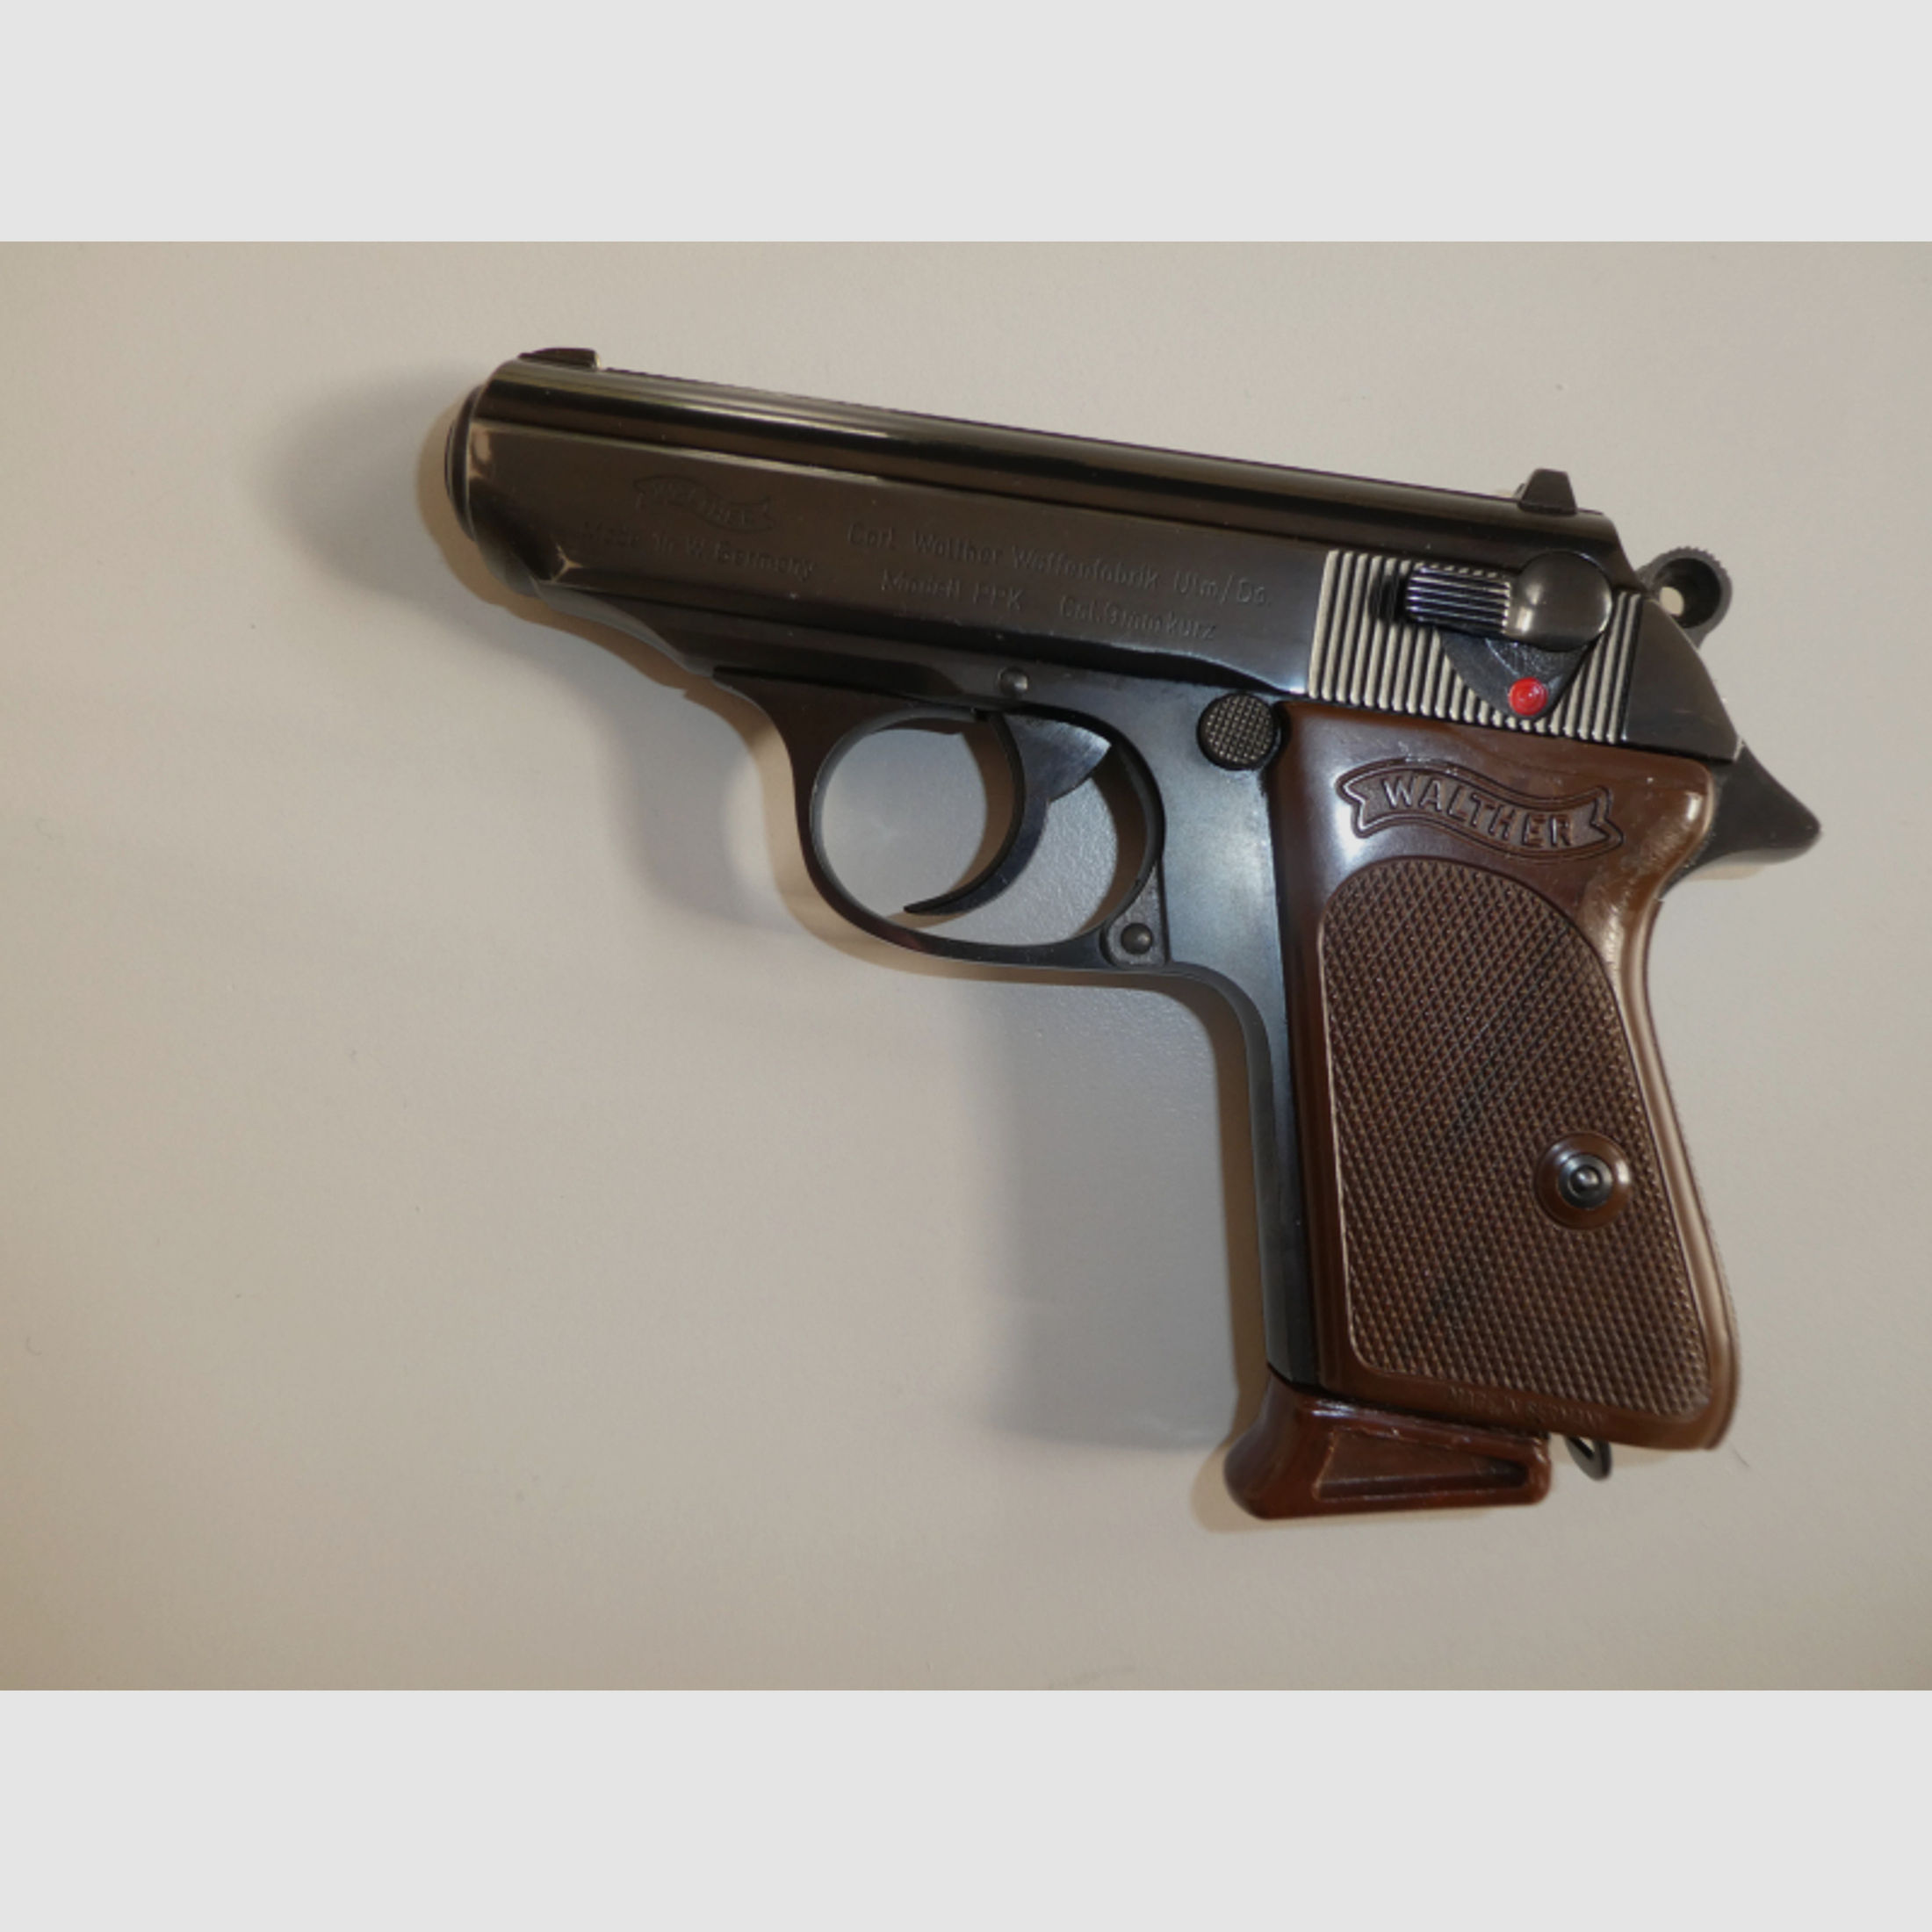 Pistole Walther - Modell PPK - Kaliber 9mmk - gepflegt - Zustand sehr gut -